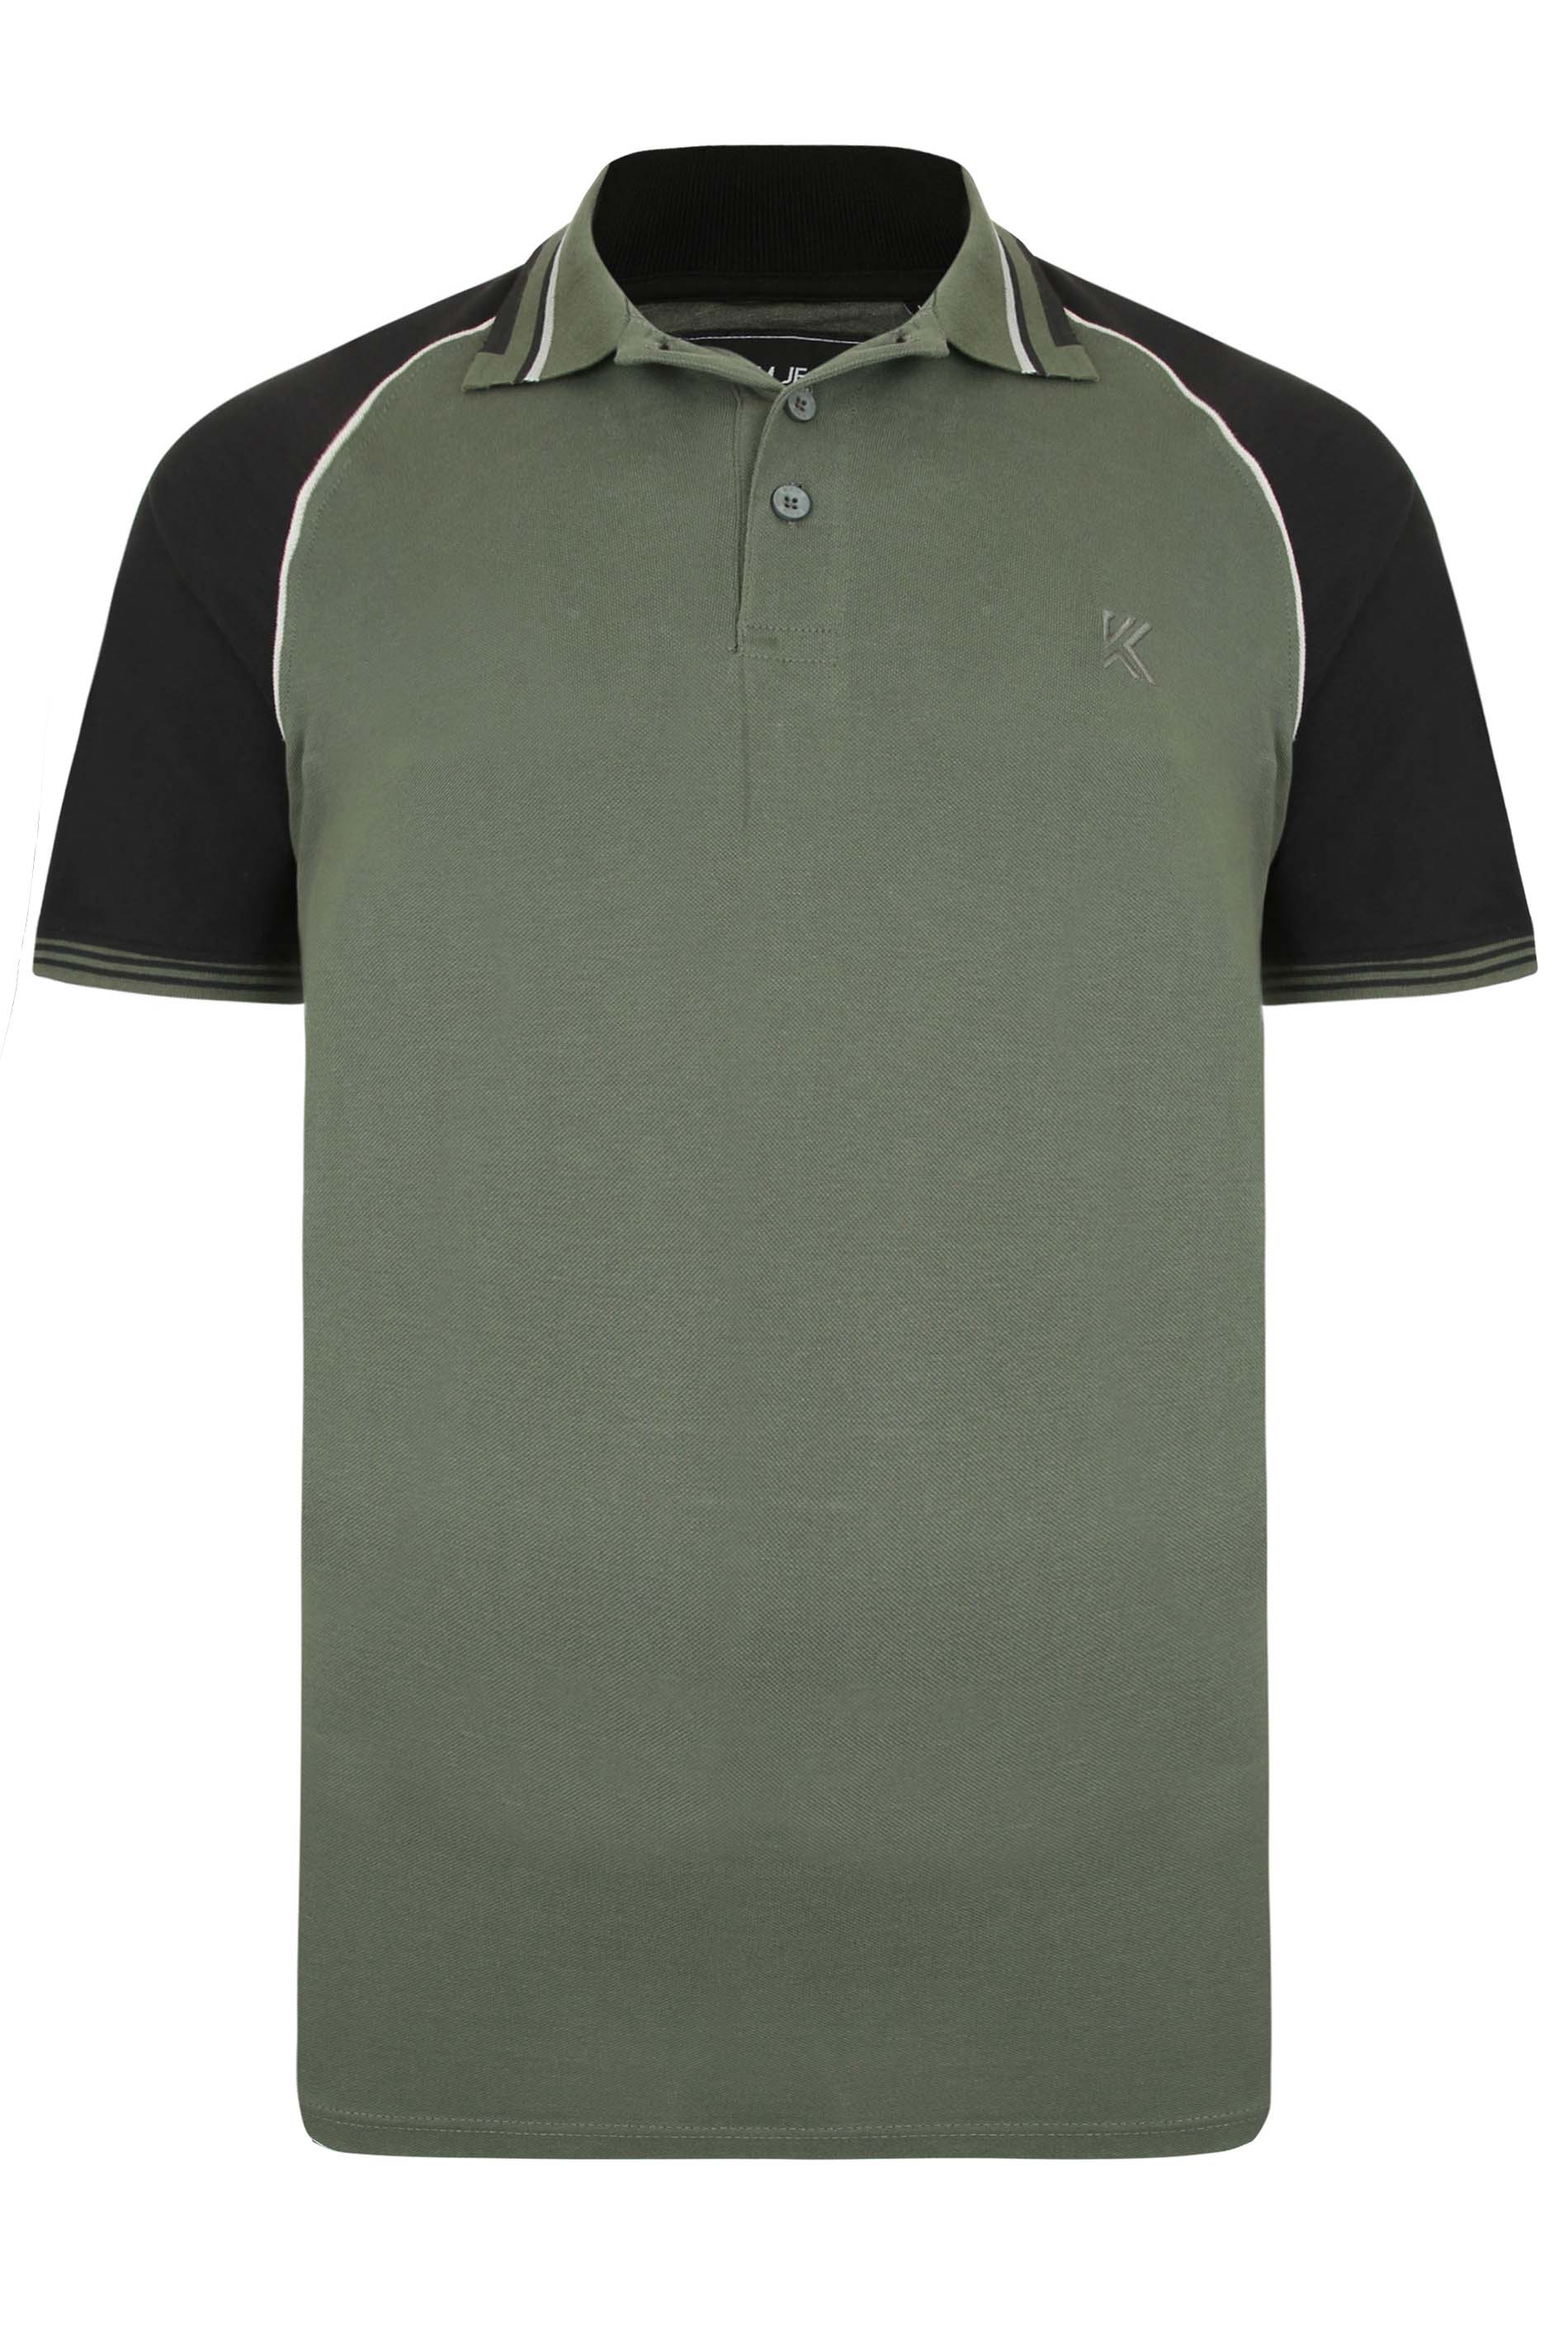 KAM Khaki Green Raglan Tipped Polo Shirt | BadRhino